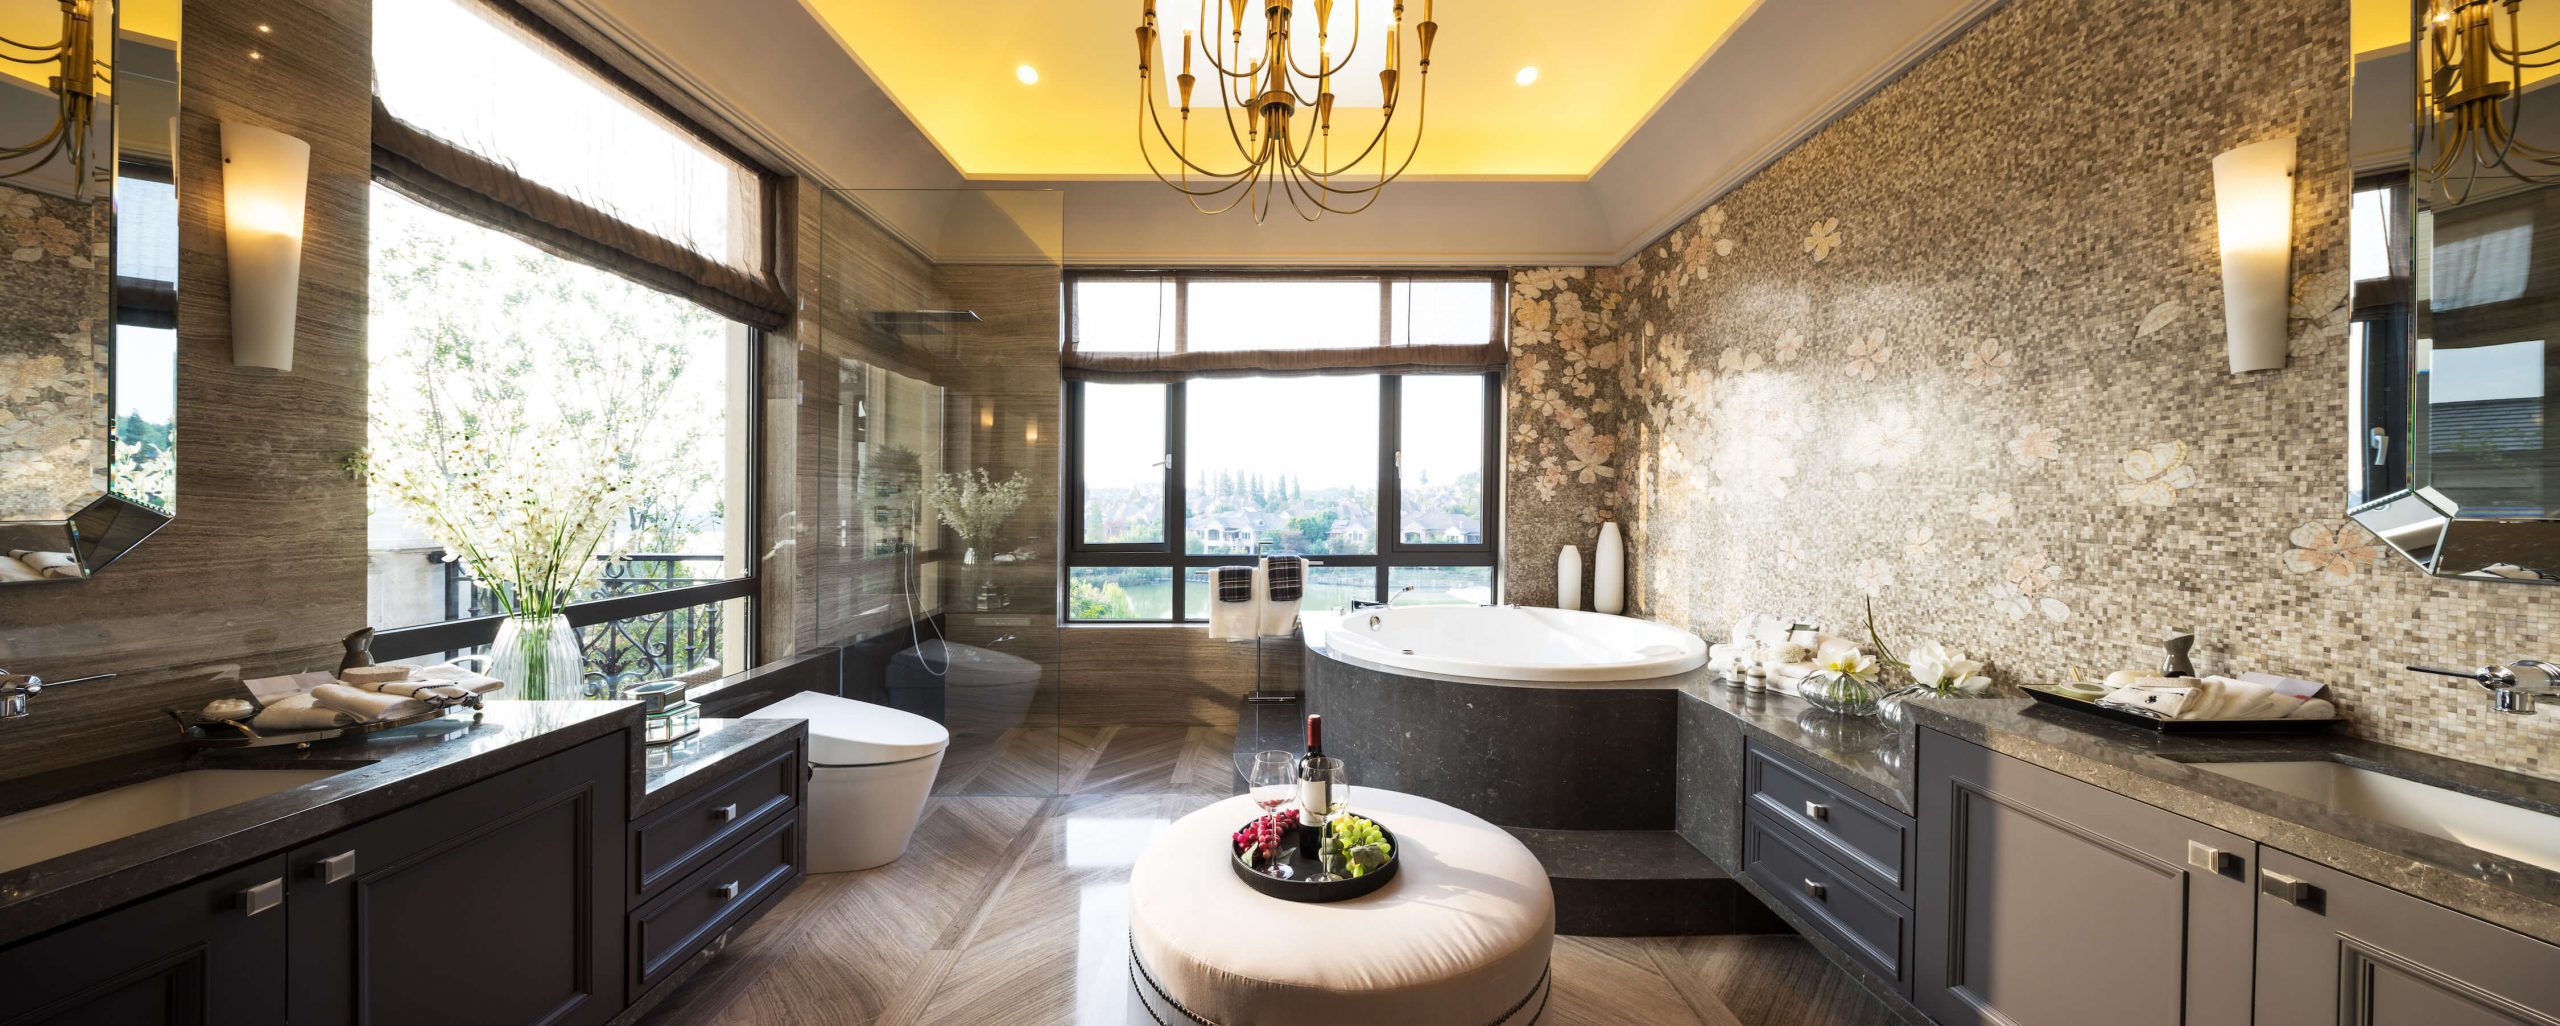 48 Modern Bathroom Ideas for a Spa-Like Escape